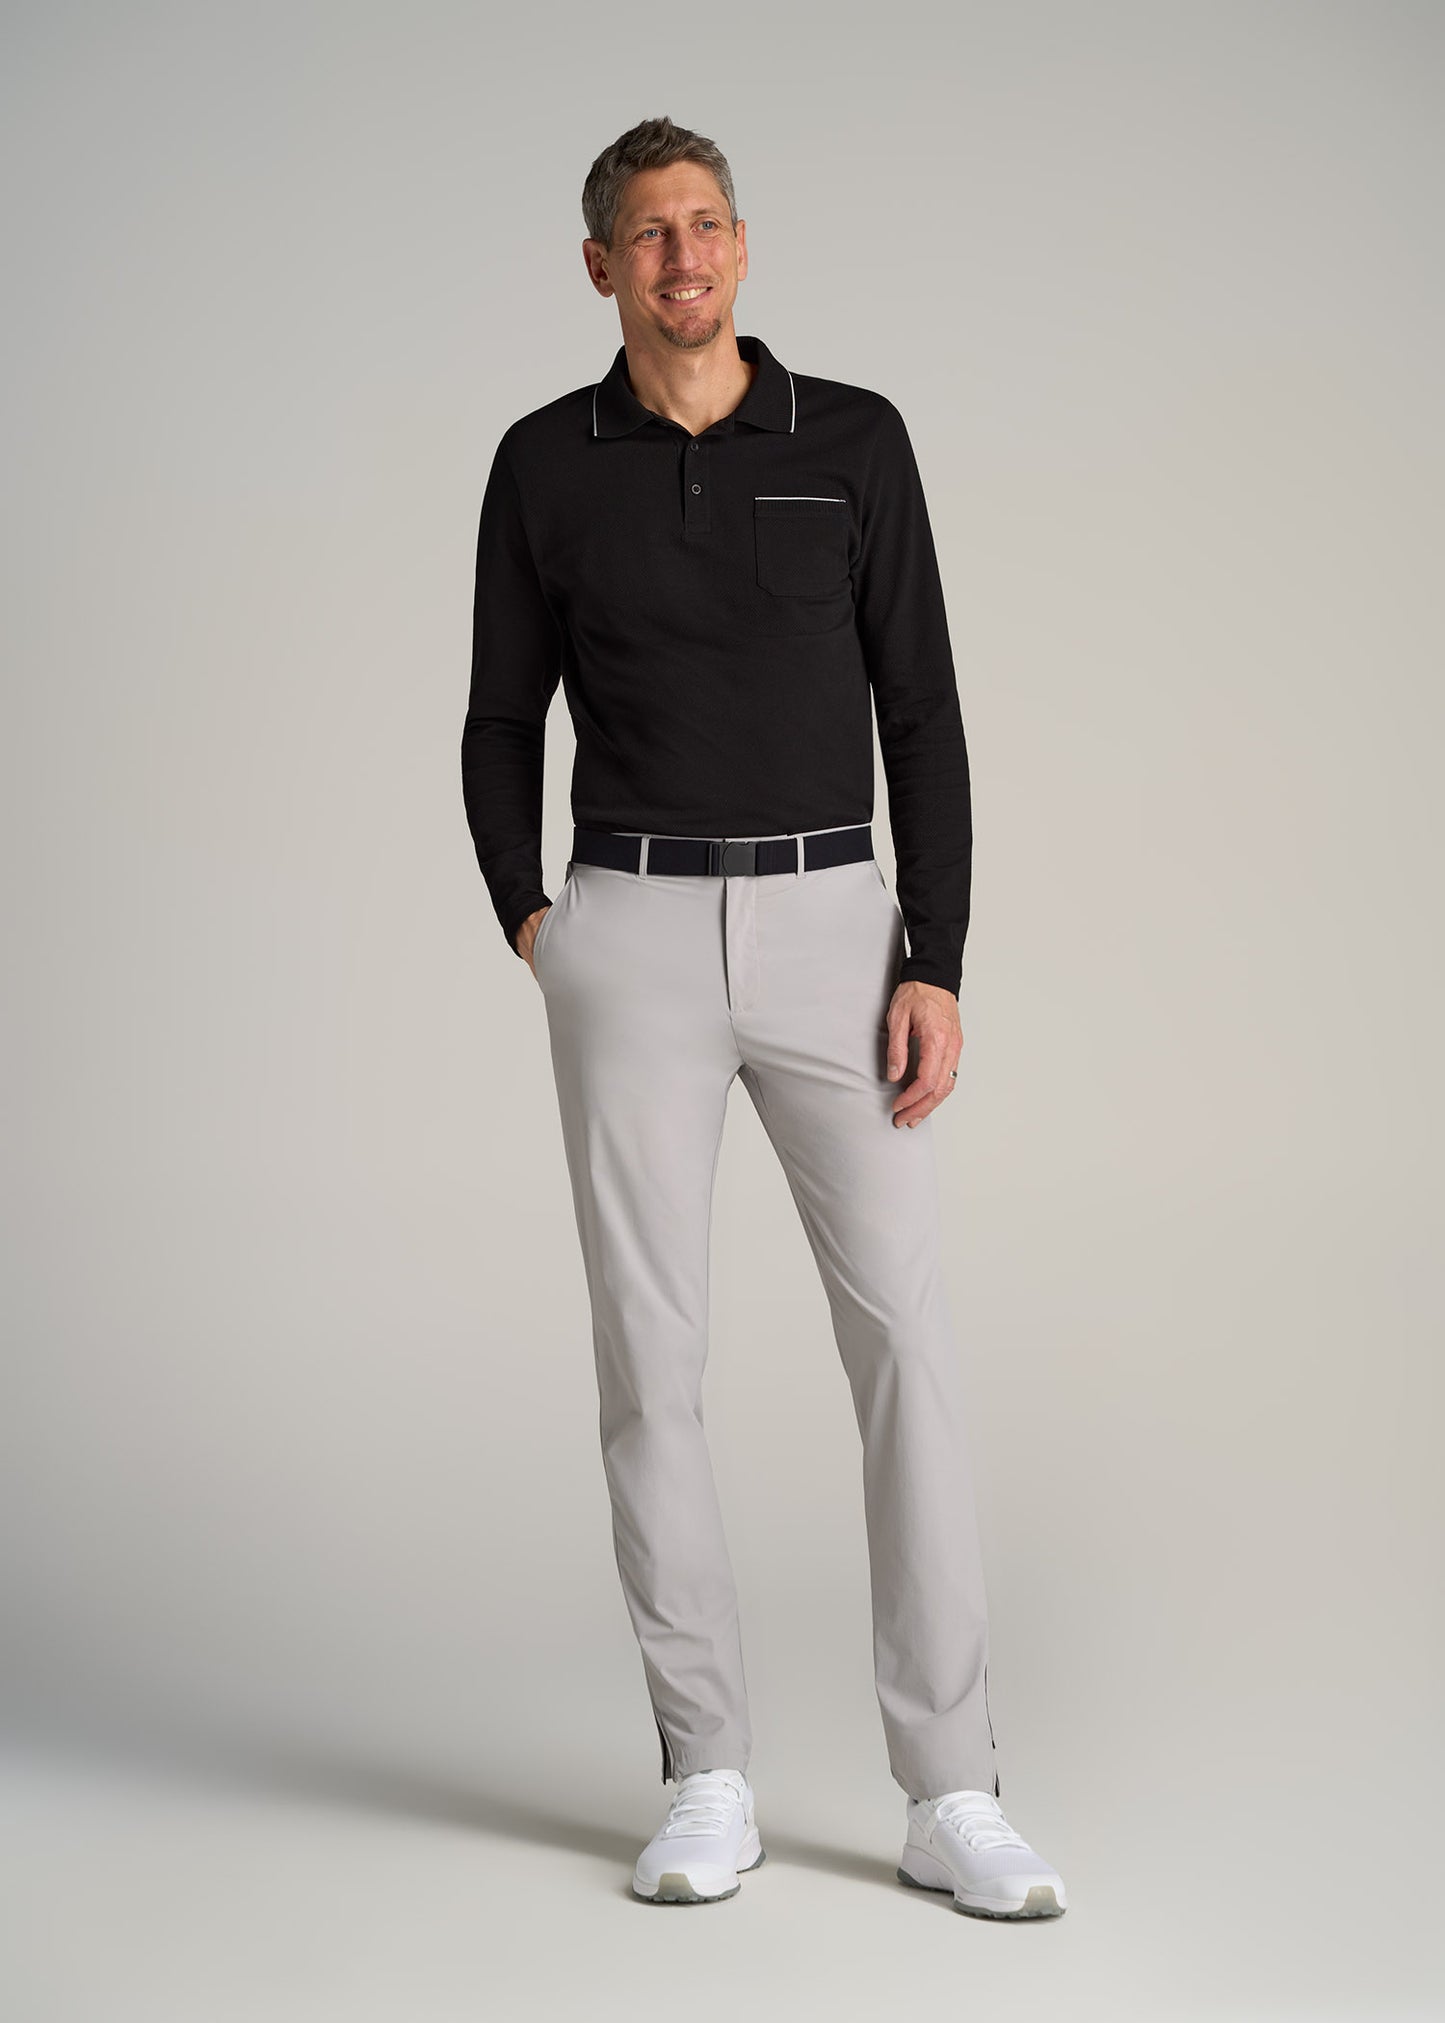 Black Mens Dress Pants Men's Fashion Casual Stitching Leg Multi-pocket Pants  Pants - Walmart.com